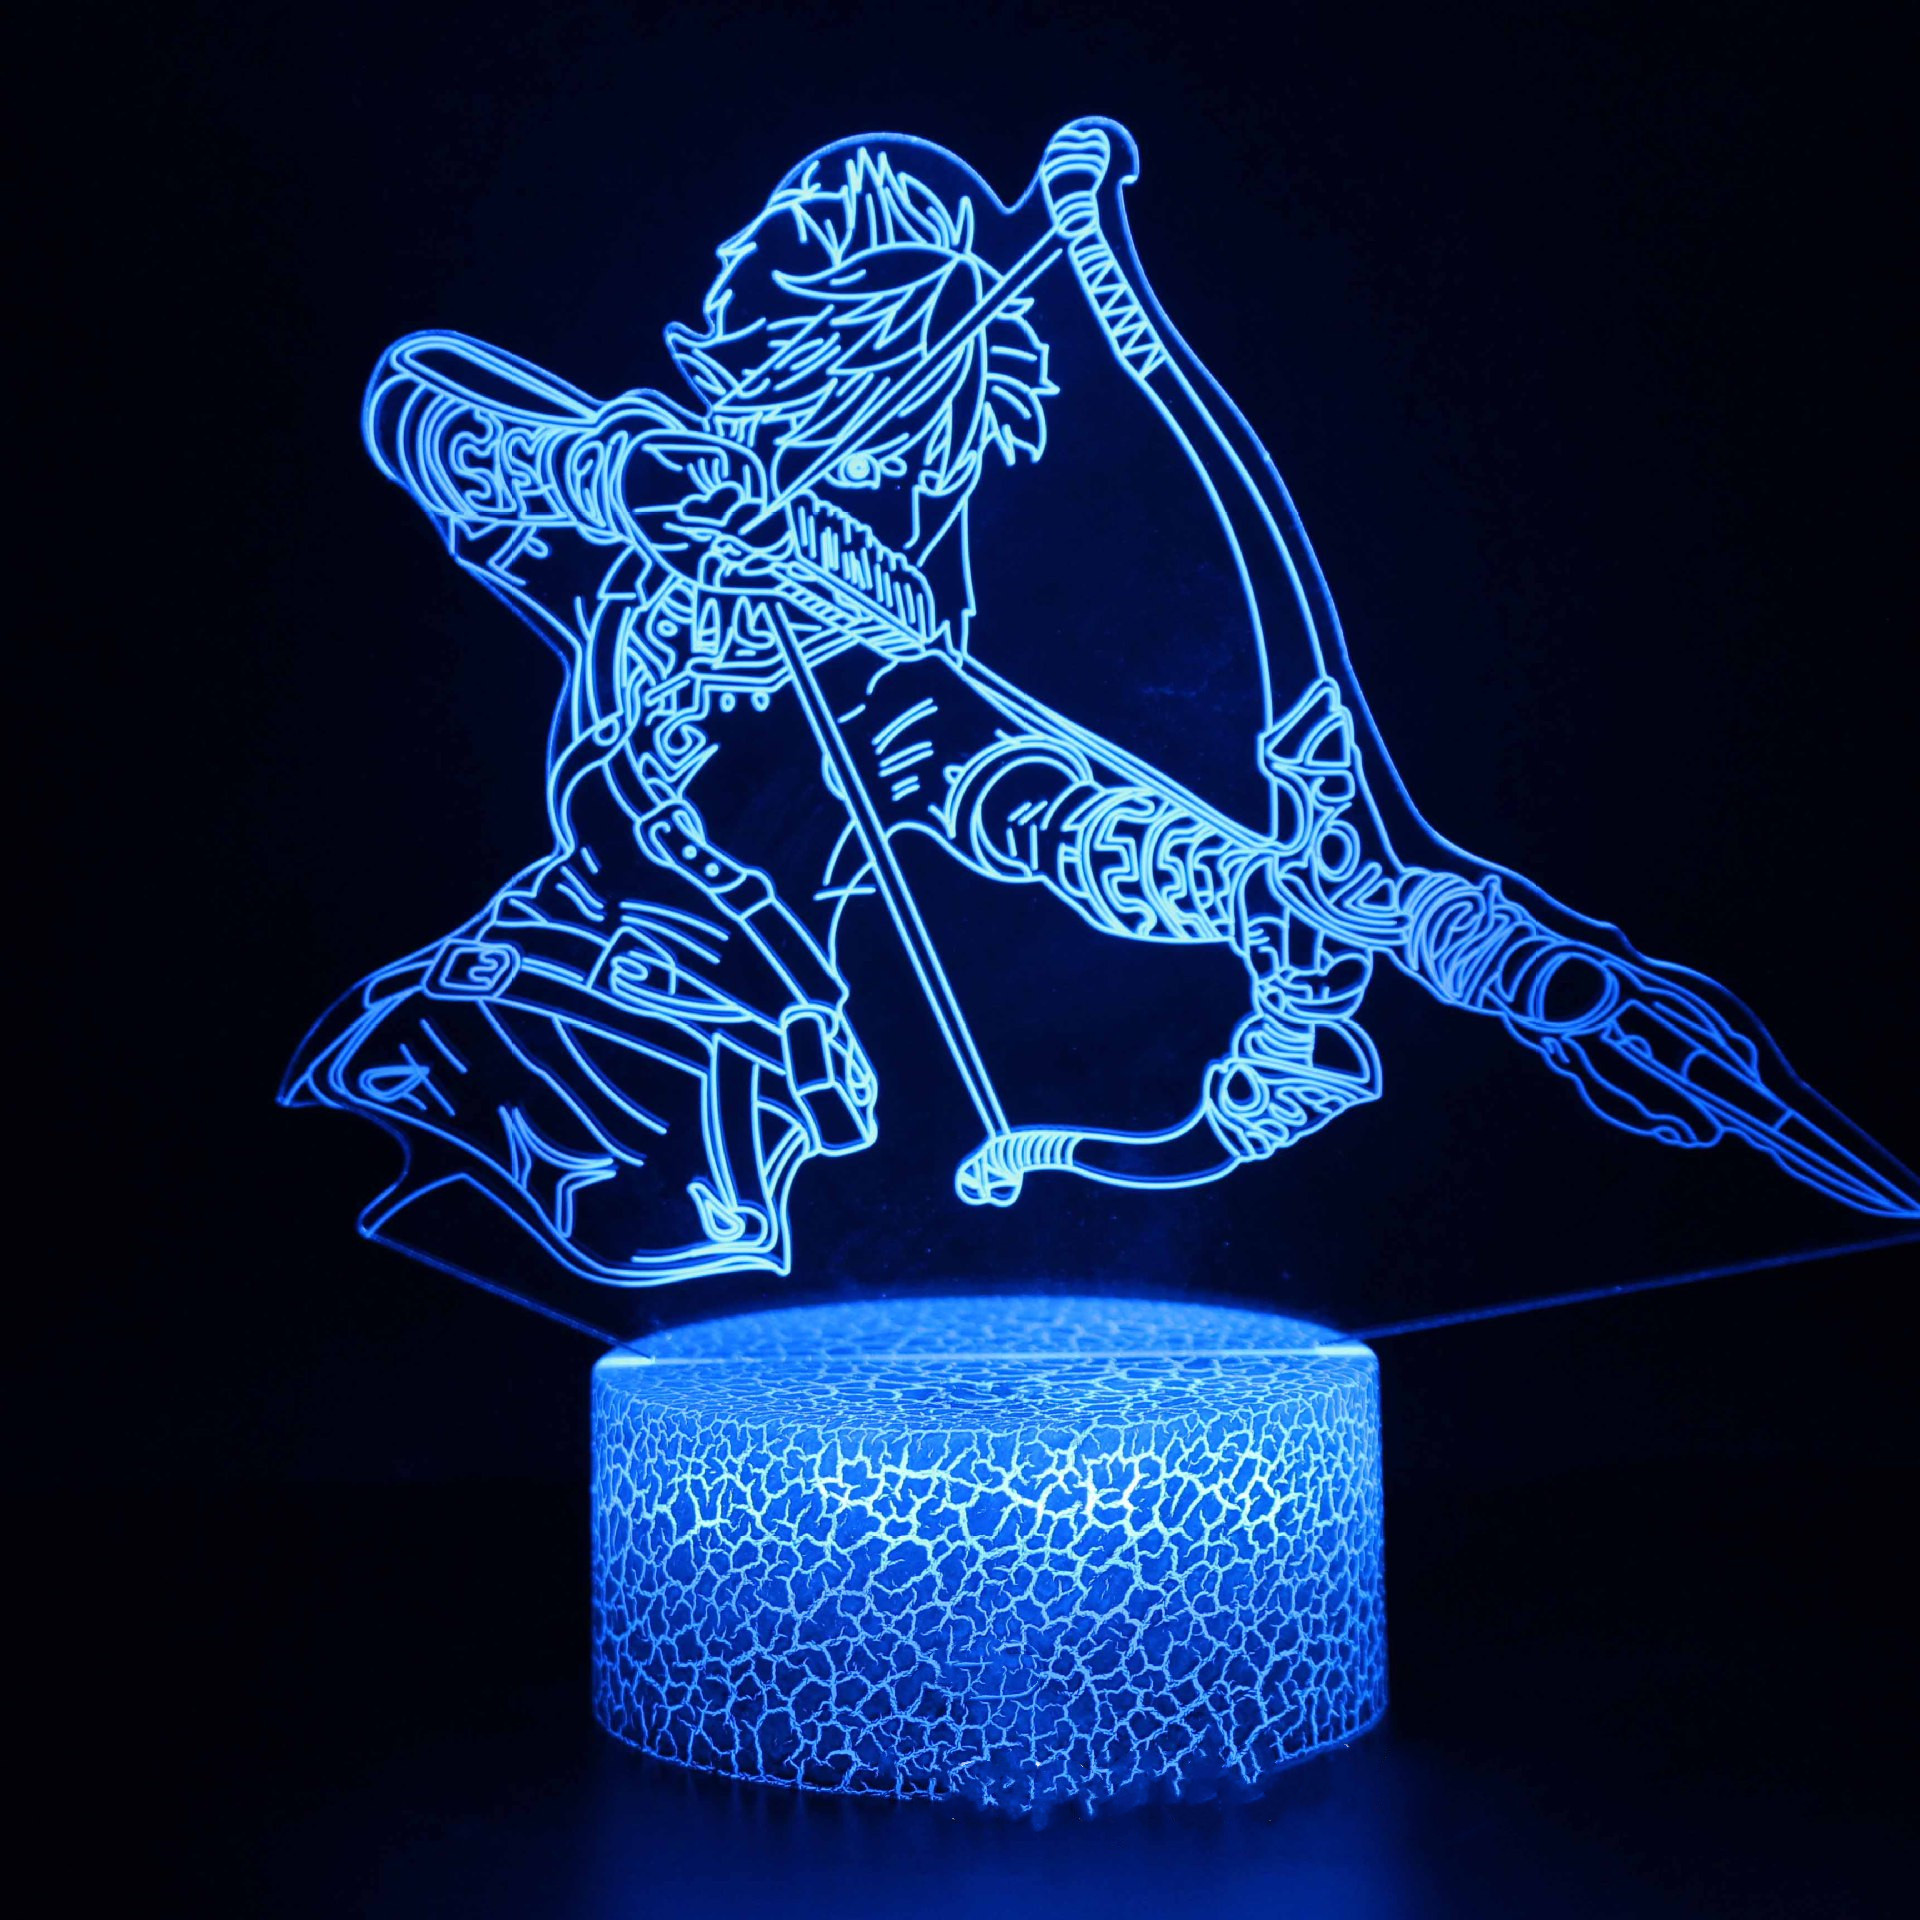 Cartoon Zelda Night Lights 3D Led Anime Lamp Link Breath of the Wild Lighting Bedroom Decoration 5 - Zelda Plush